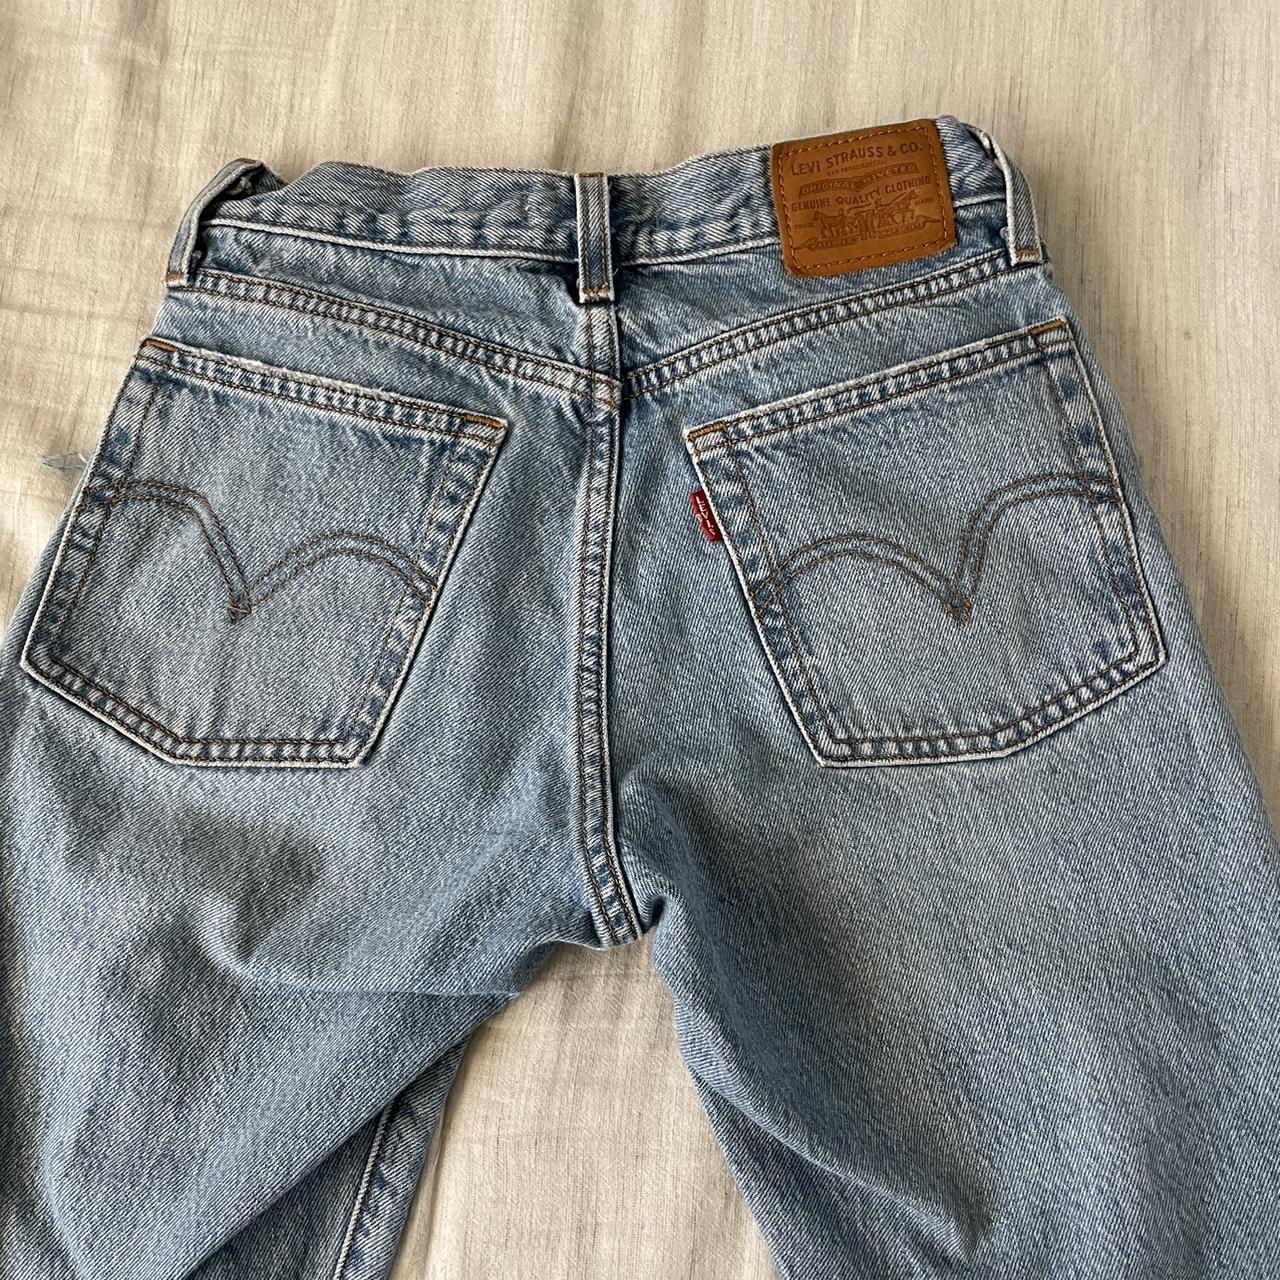 medium wash ripped levi jeans straight fit - Depop